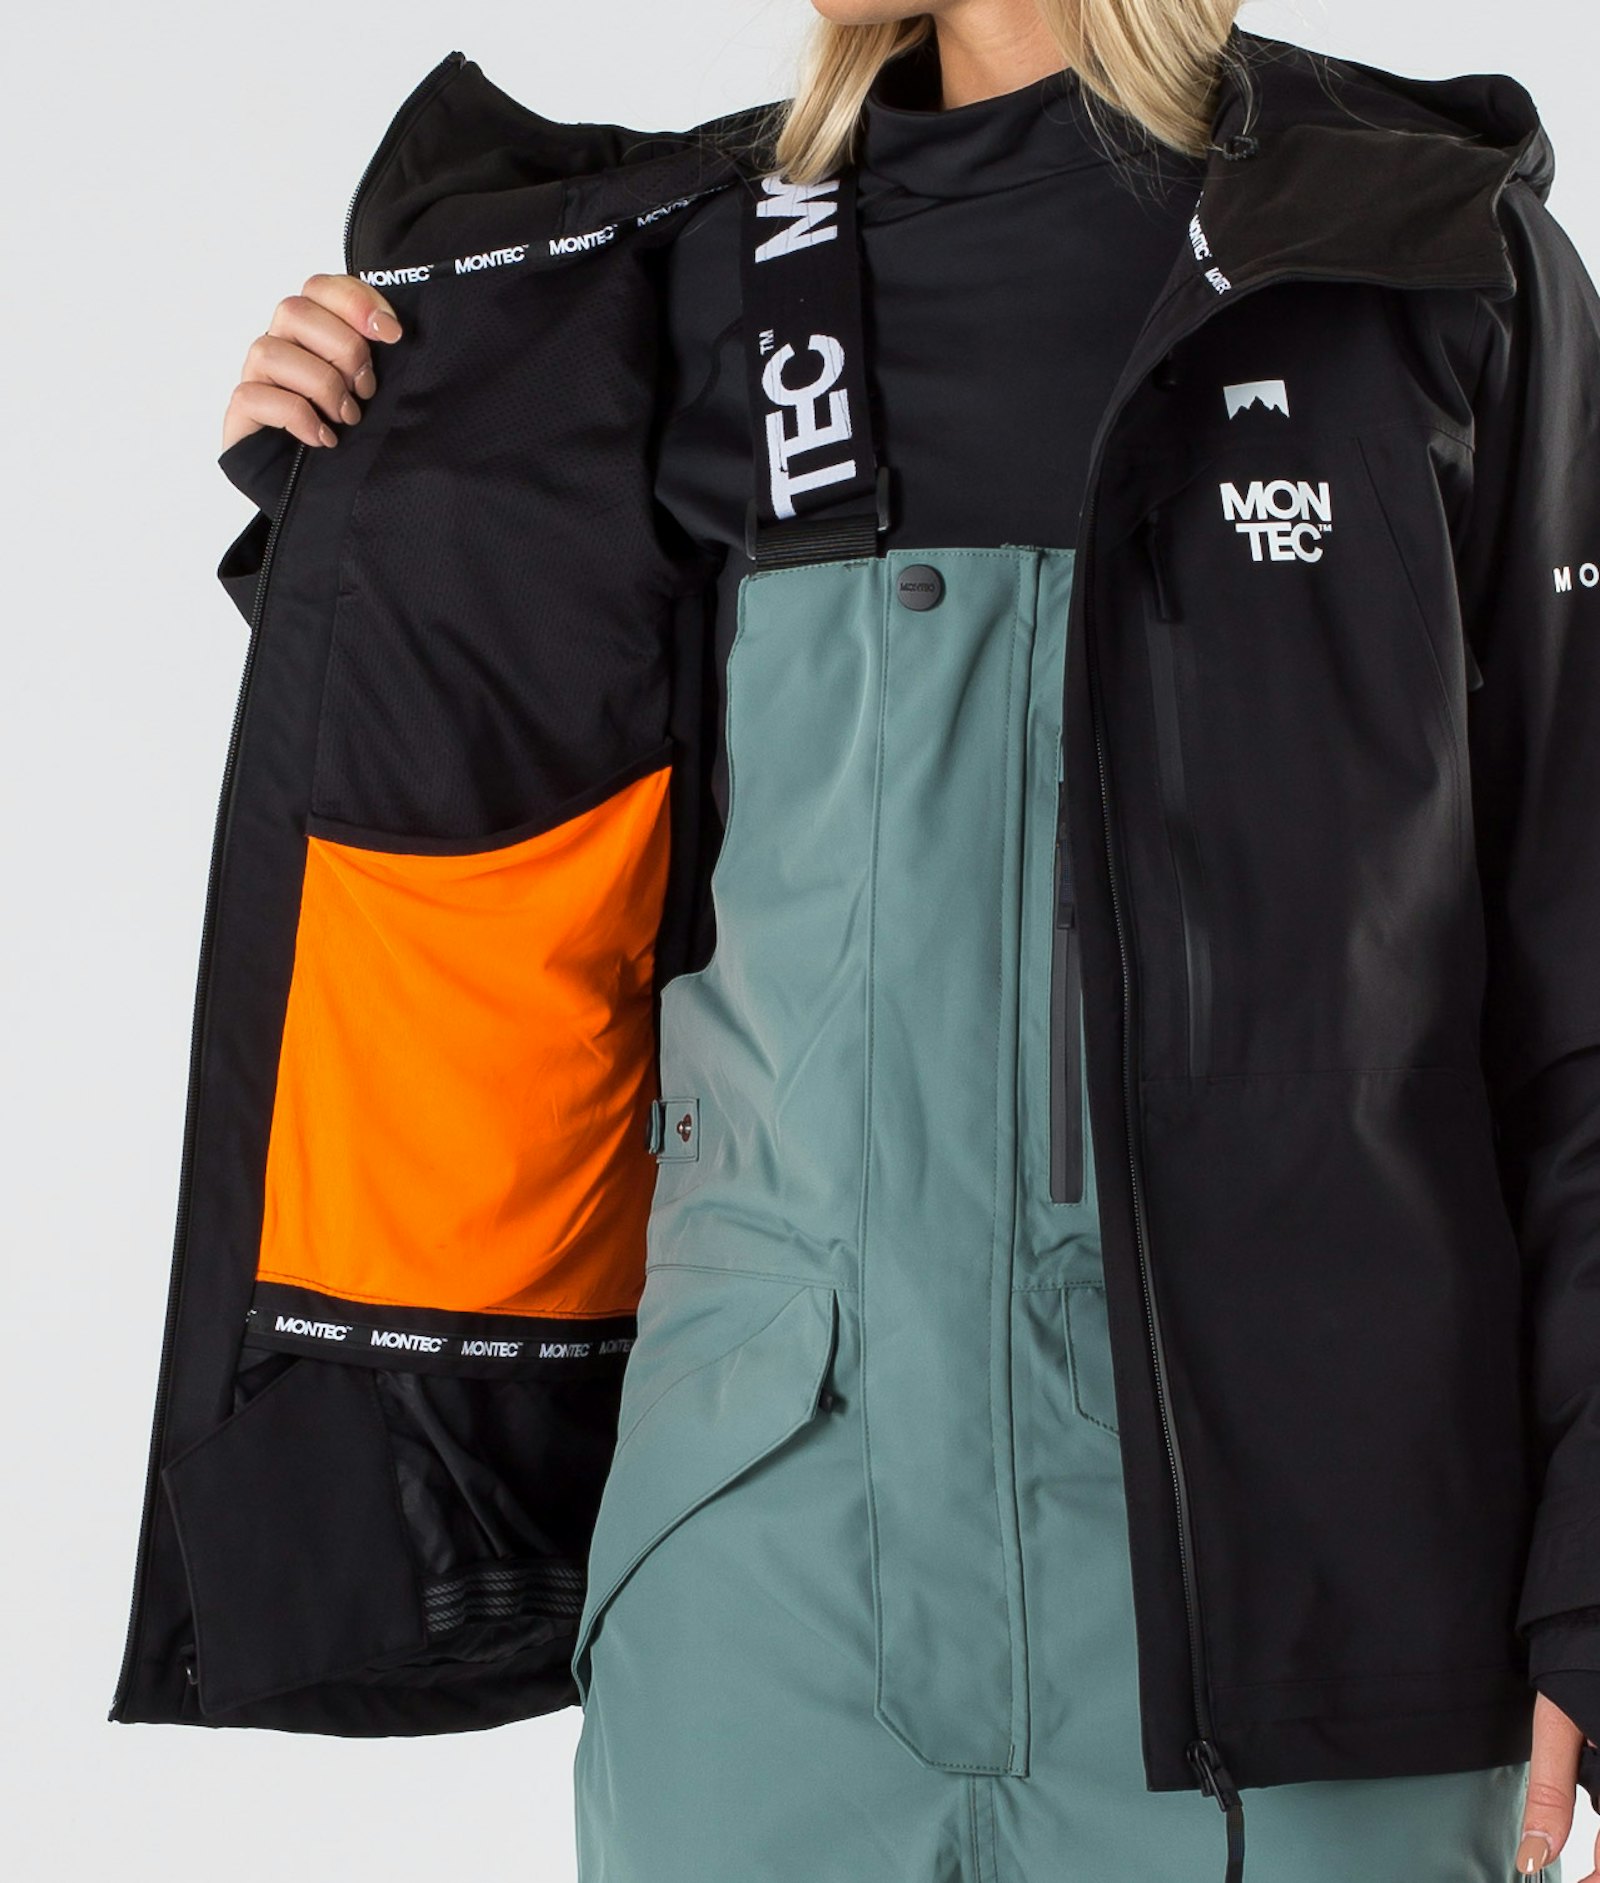 Moss W 2019 Snowboard jas Dames Black